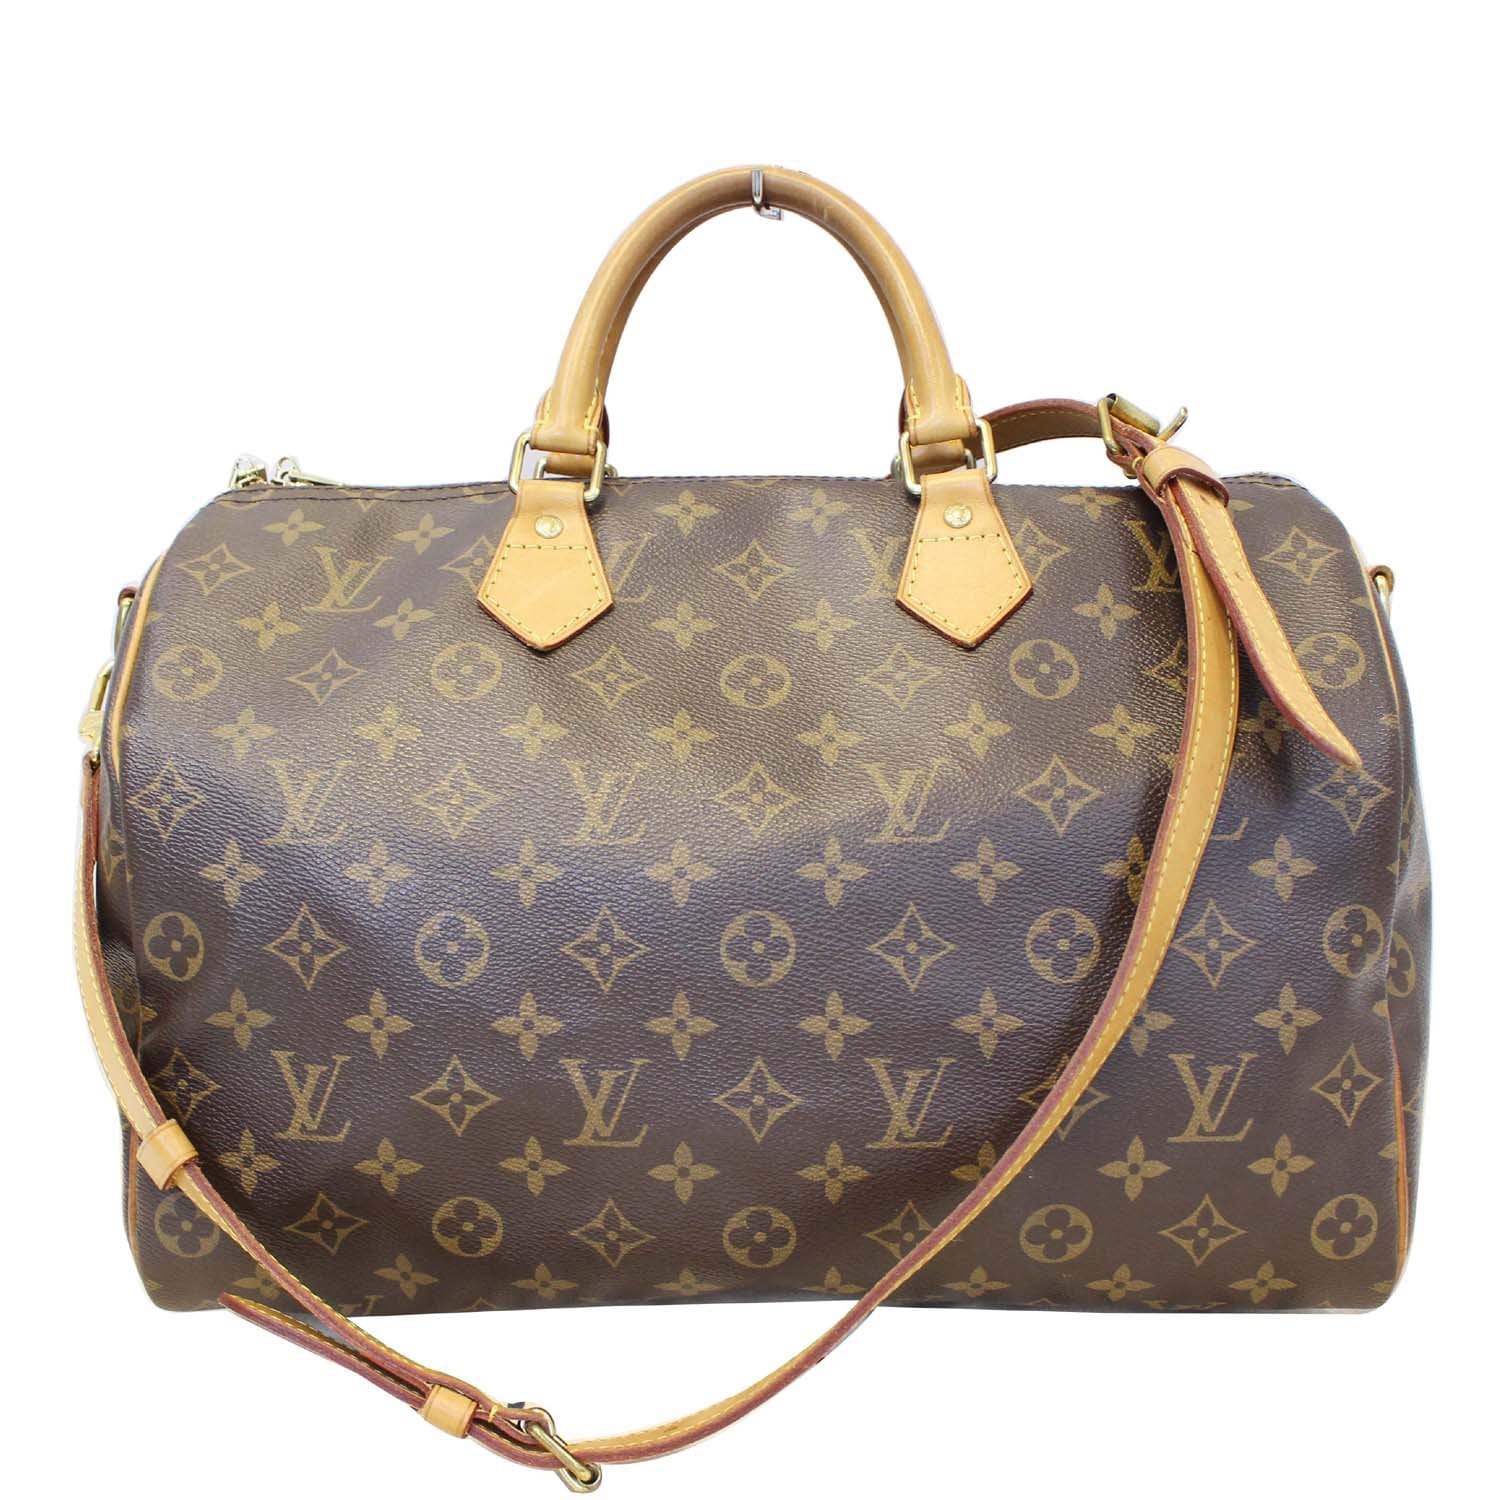 Louis Vuitton bag drop Louis Vuitton speedy 35 $609 Louis Vuitton speedy 40  $379 Louis Vuitton KEEPALL 45 $729 Louis Vuitton Deauville…